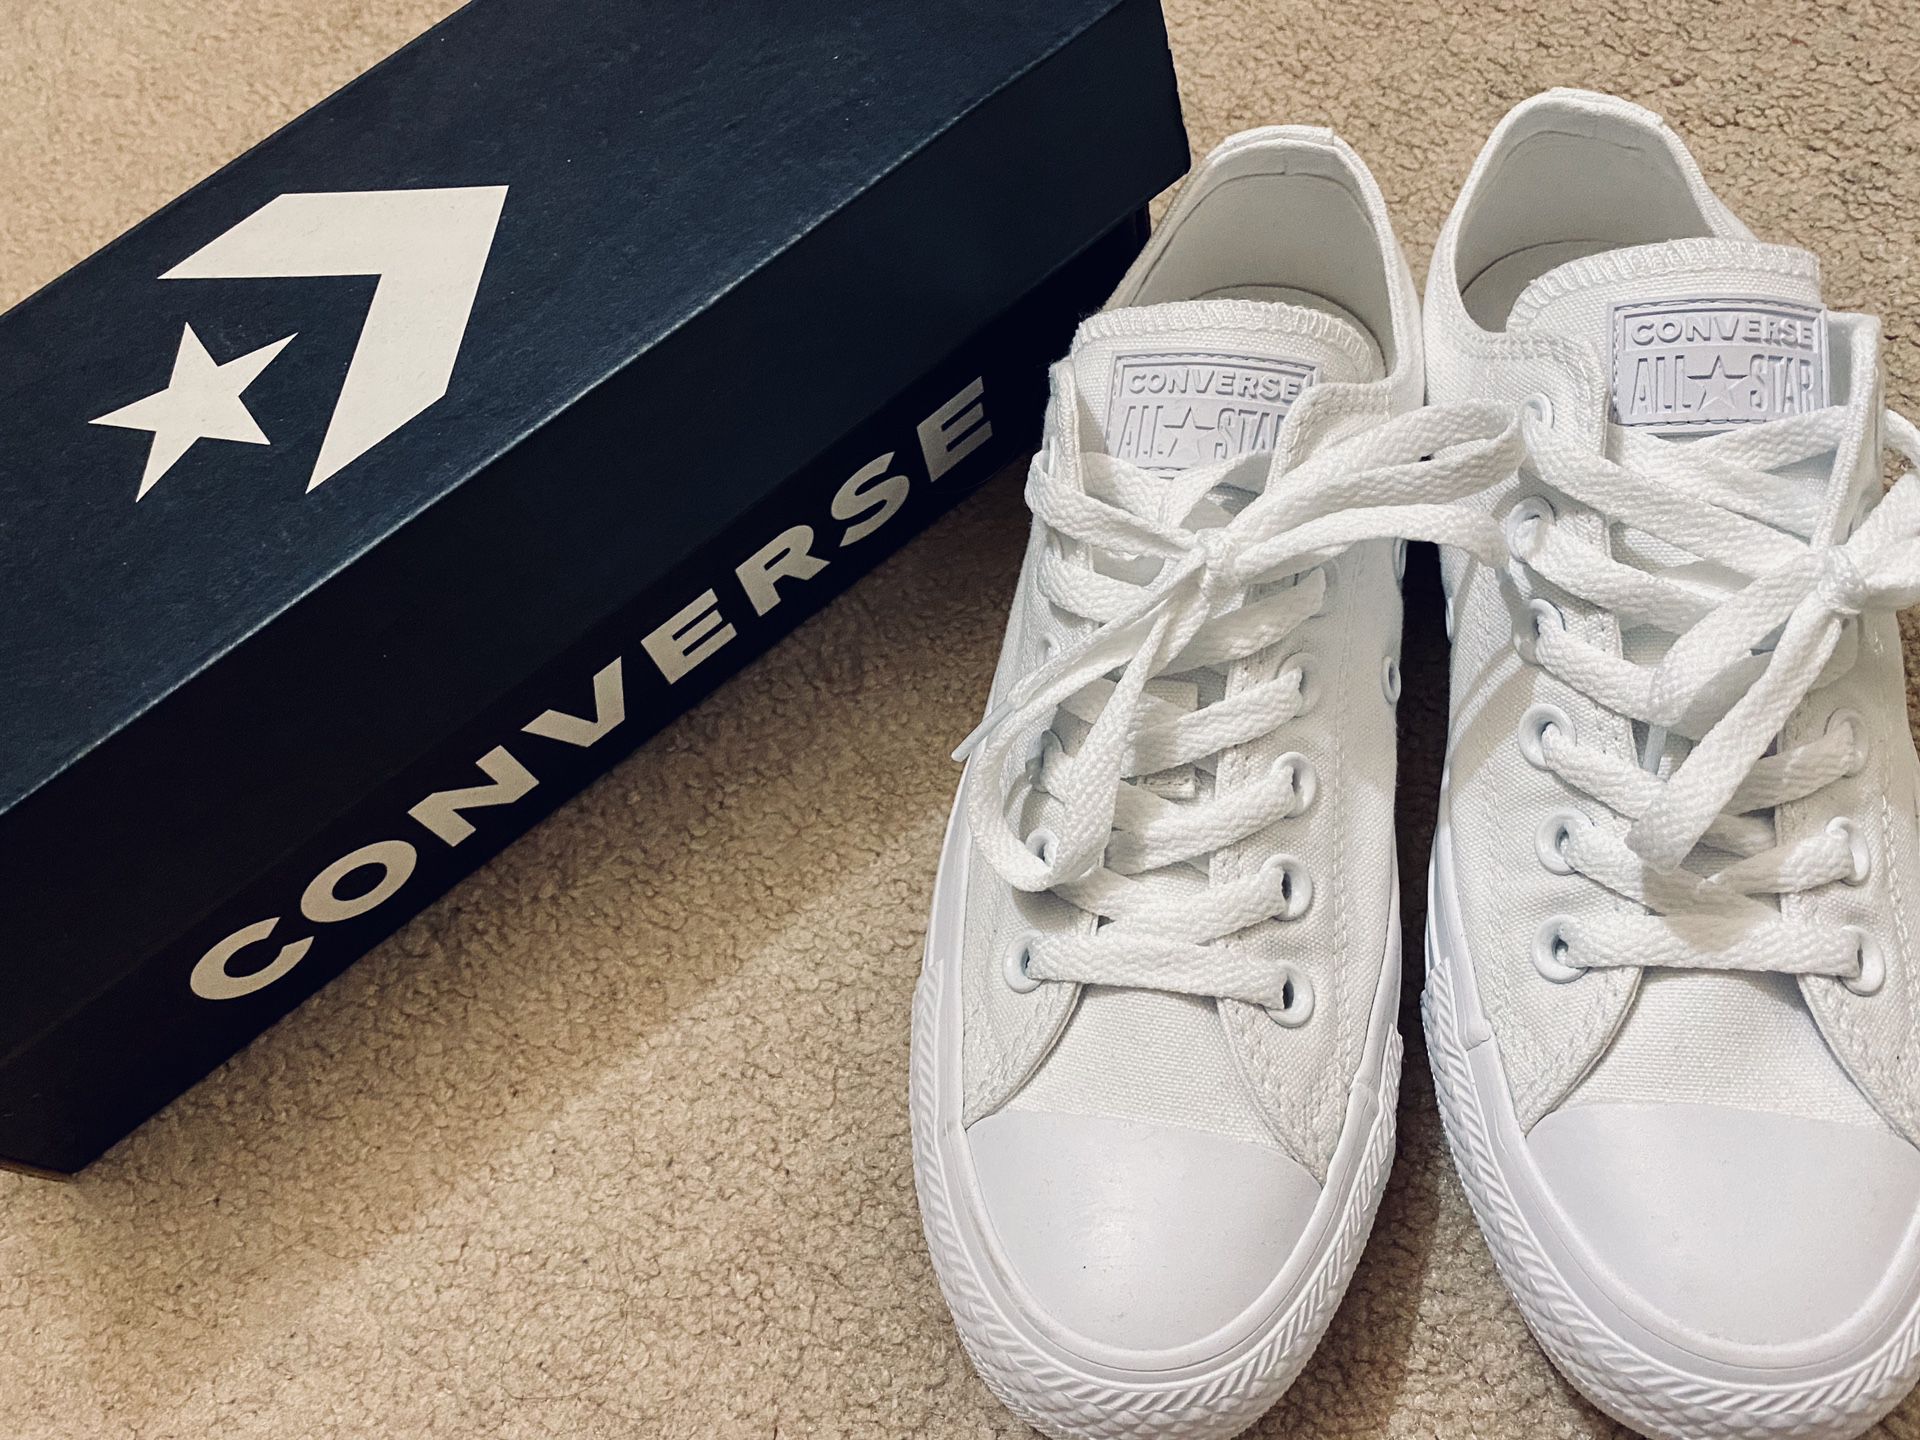 New White Converse